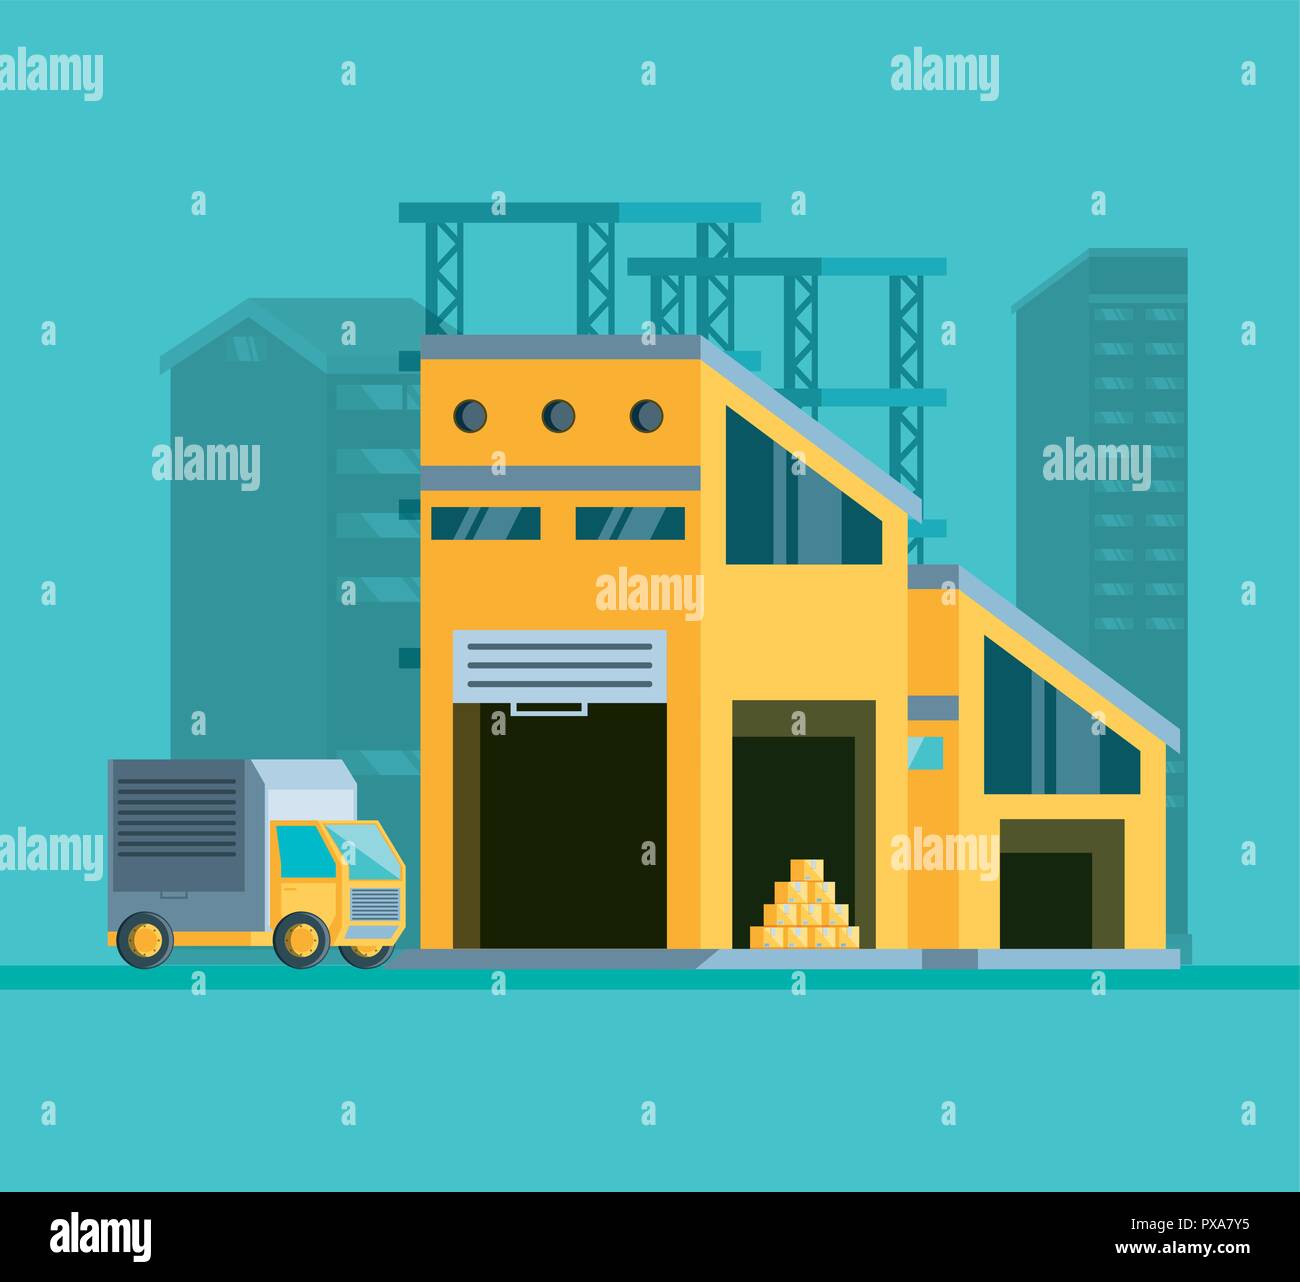 warehouse building illustration